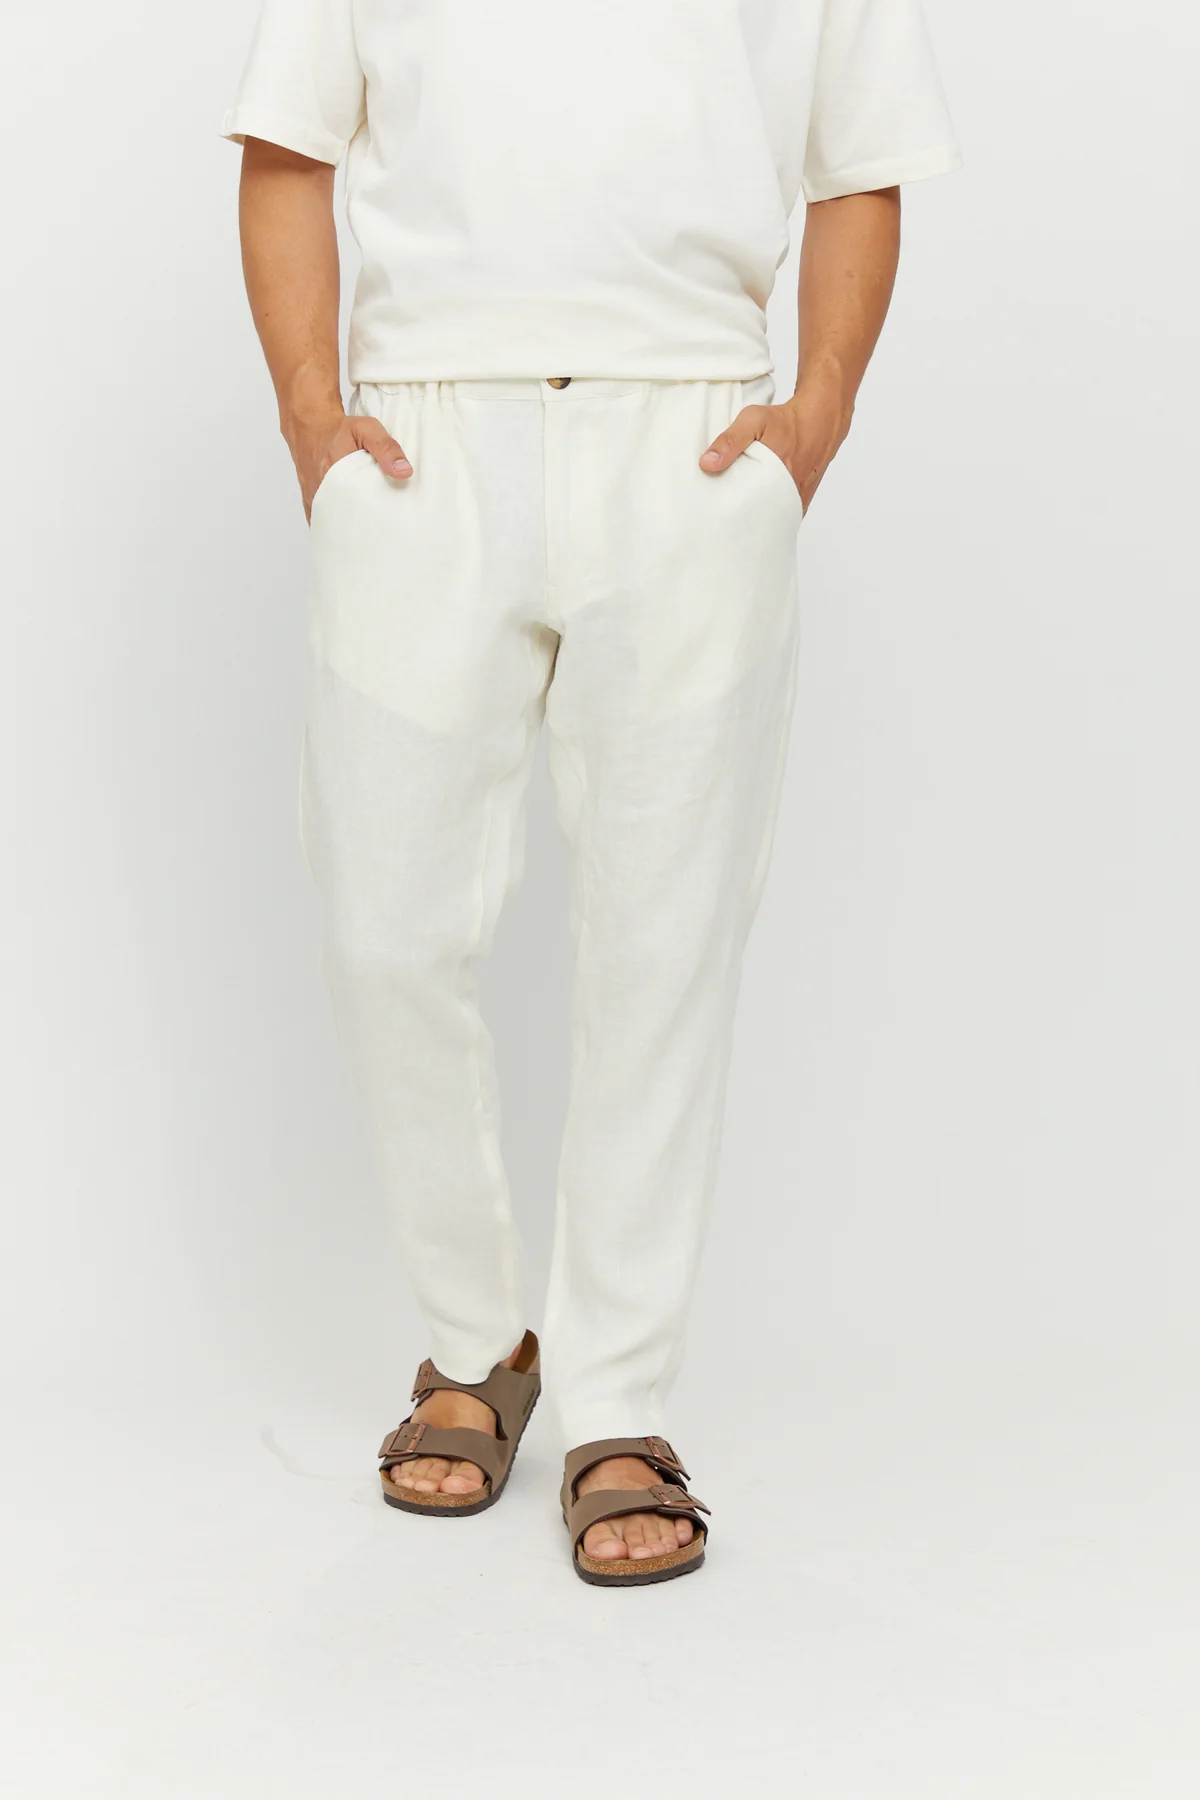 Mazine Littlefield Linen Pants - White